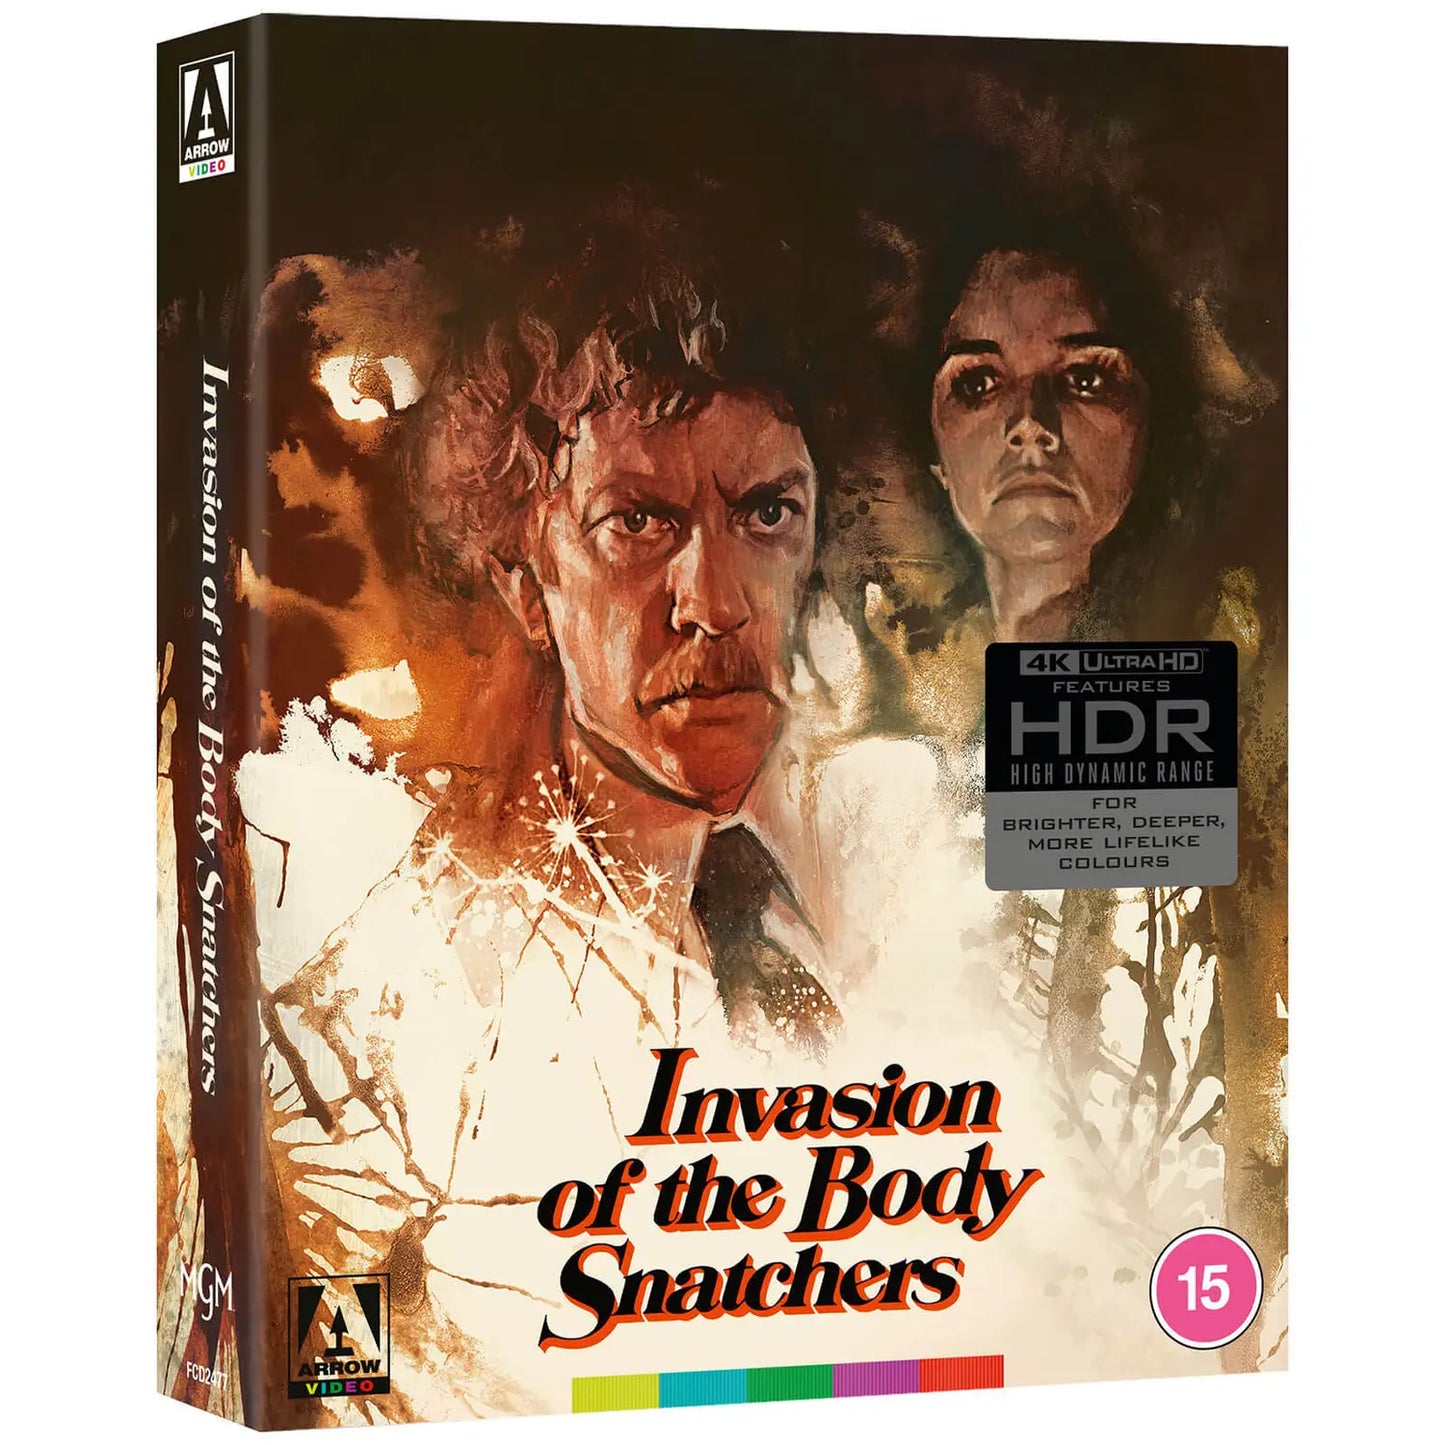 Invasion of the Body Snatchers 4K UHD Ltd. Ed. with Slip (Arrow UK/Region Free)